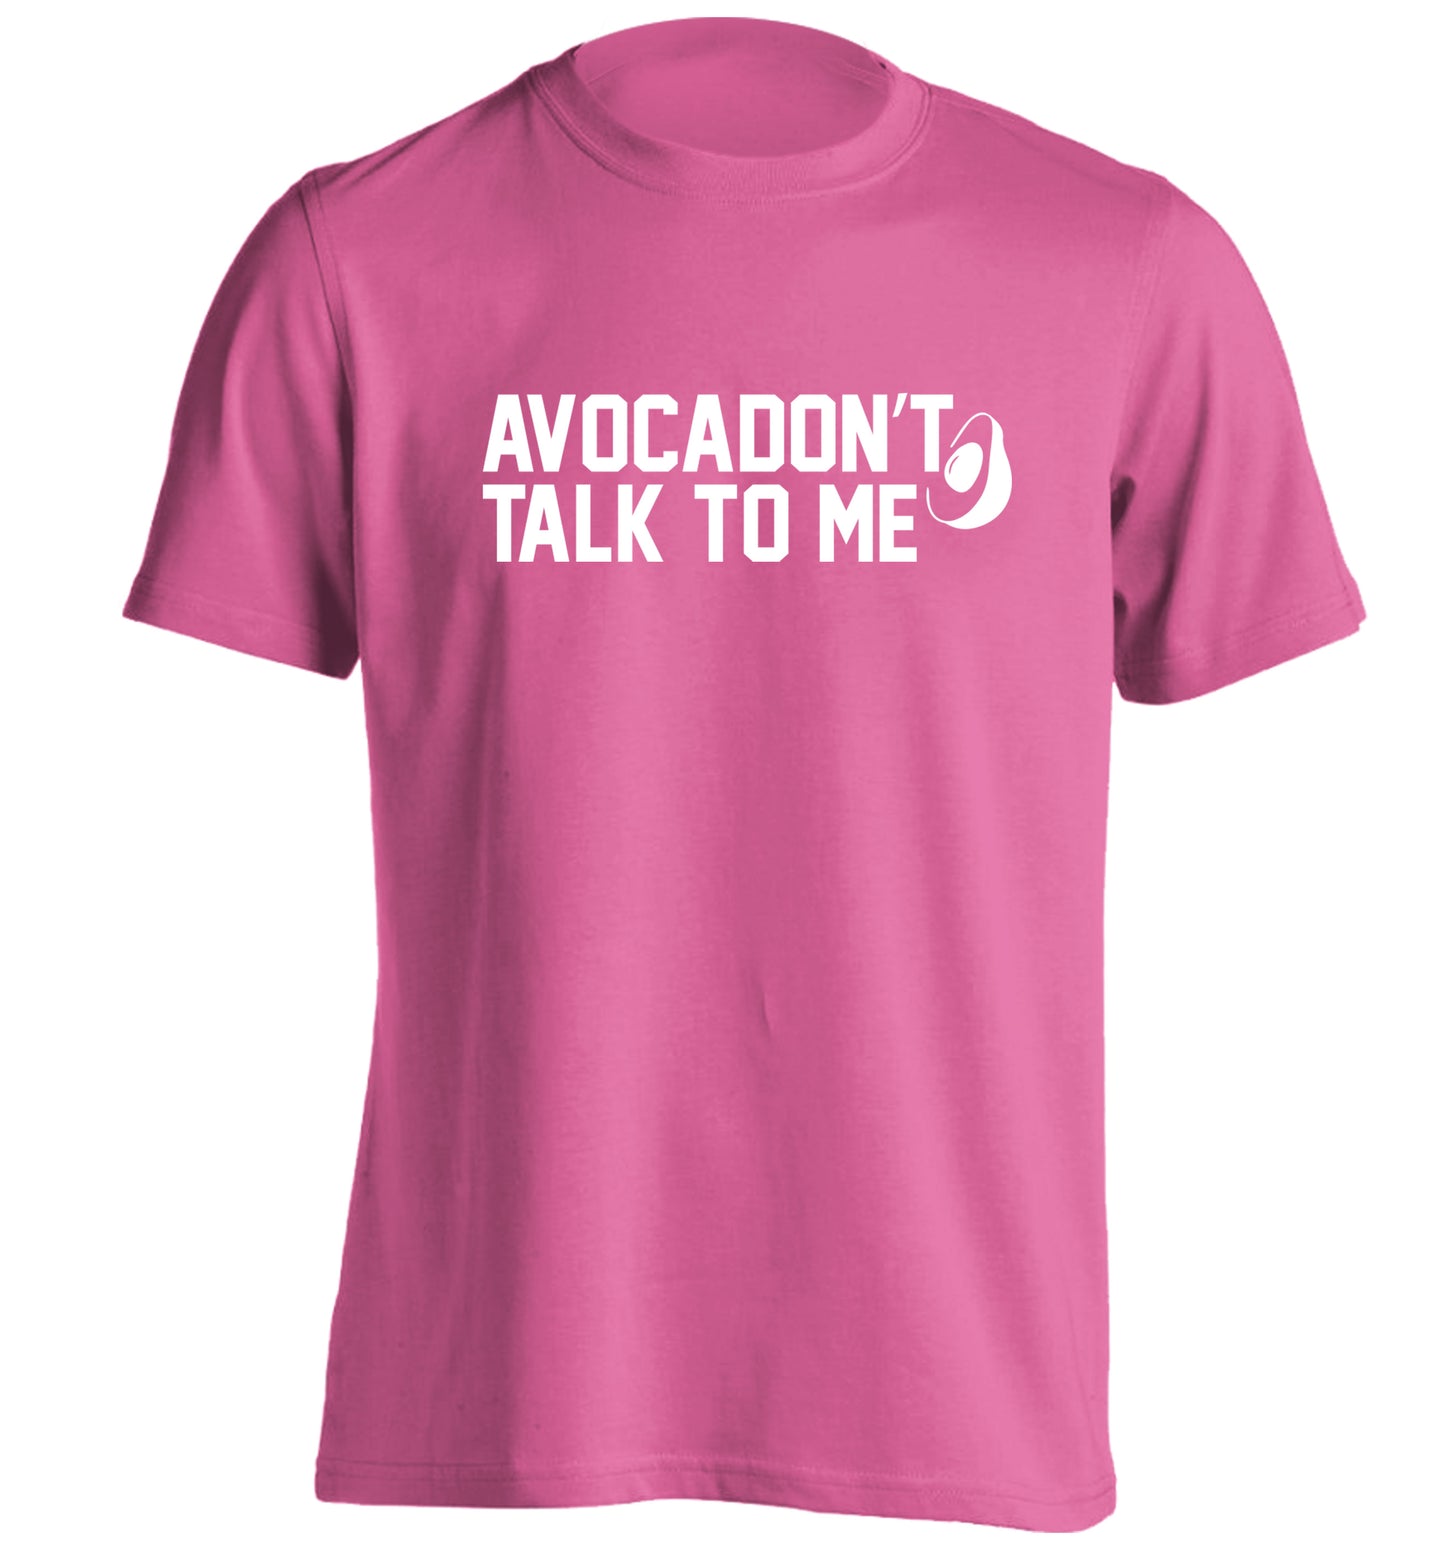 Avocadon't talk to me adults unisex pink Tshirt 2XL